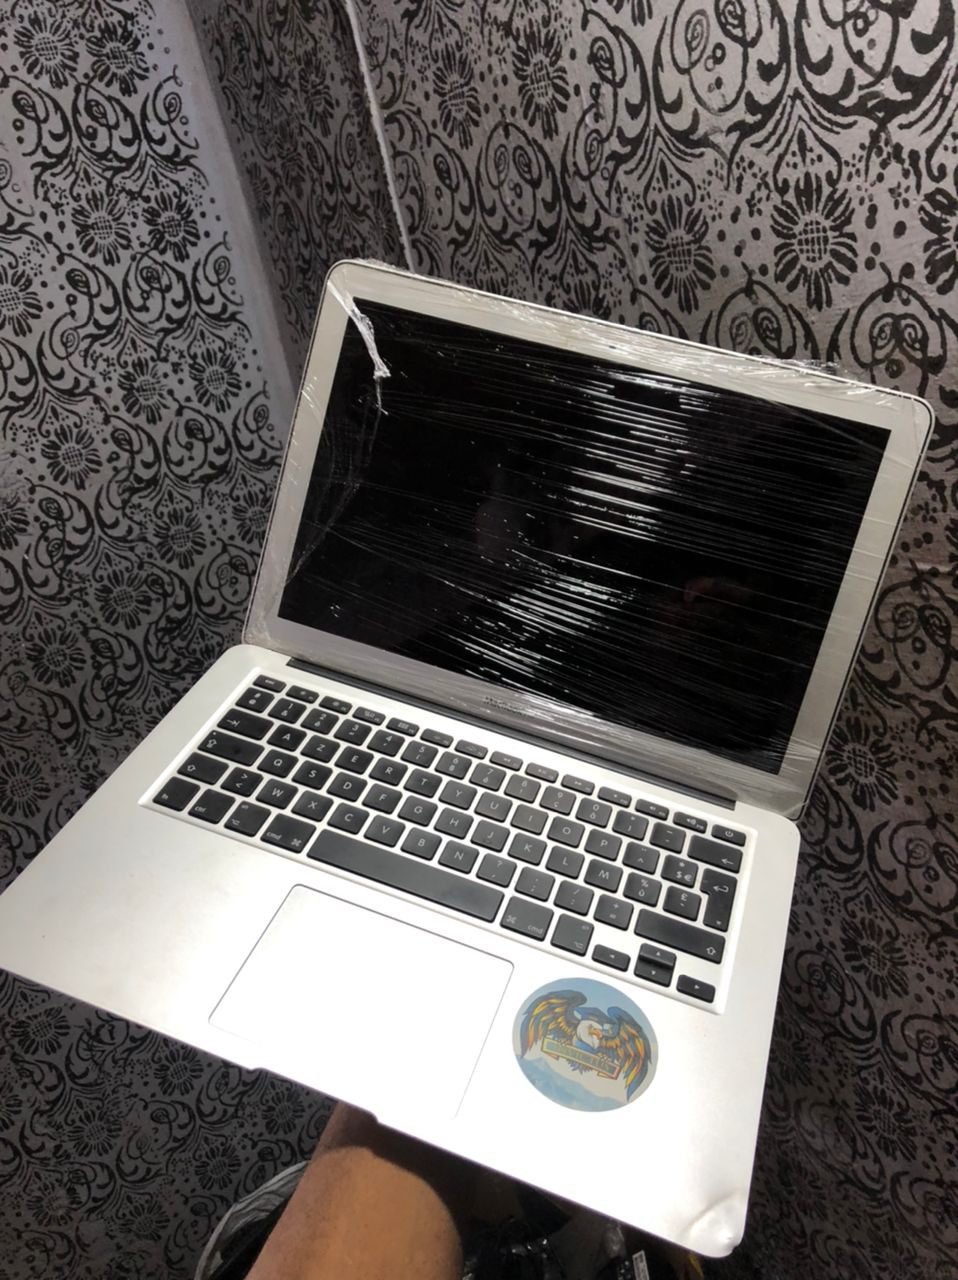 MacBook Air 2015, Corei5, 4gb Ram, 128gb SSD